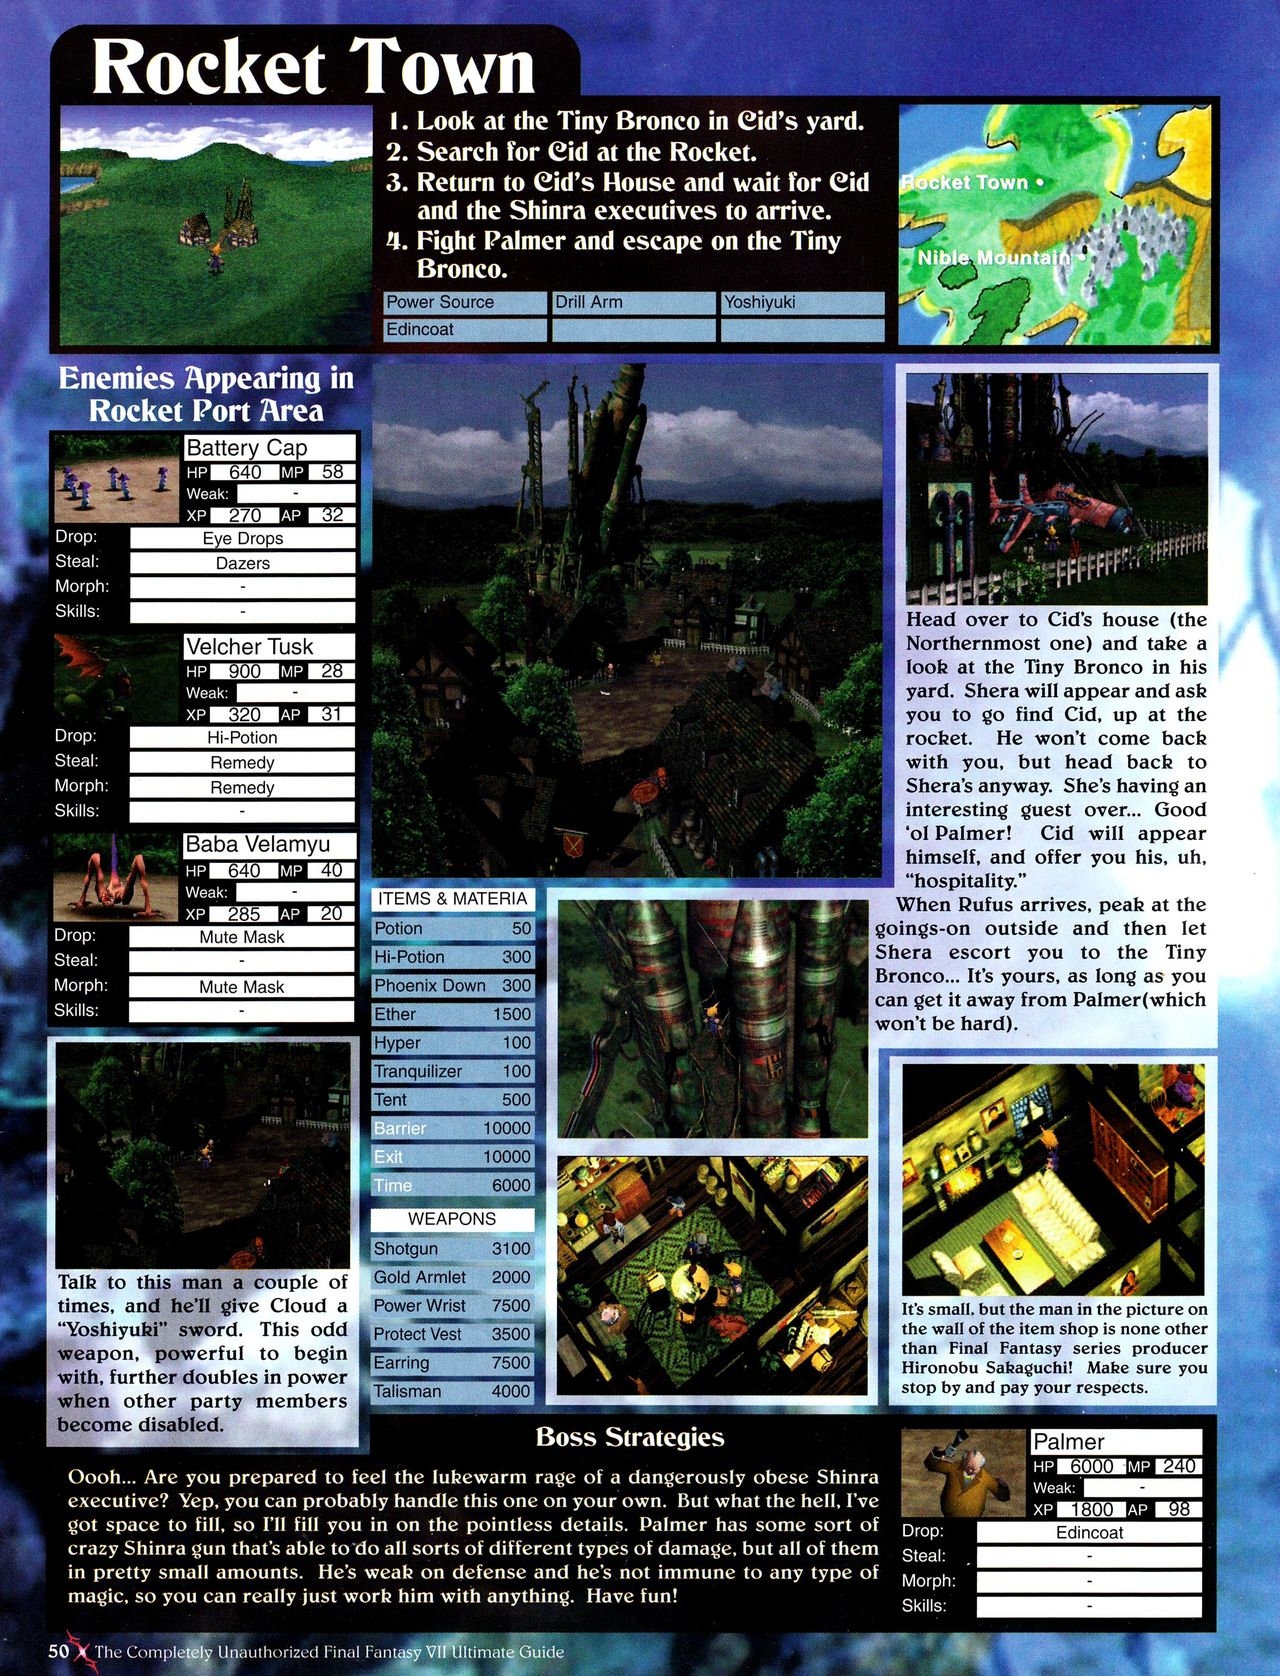 Final Fantasy VII Versus Guide 51